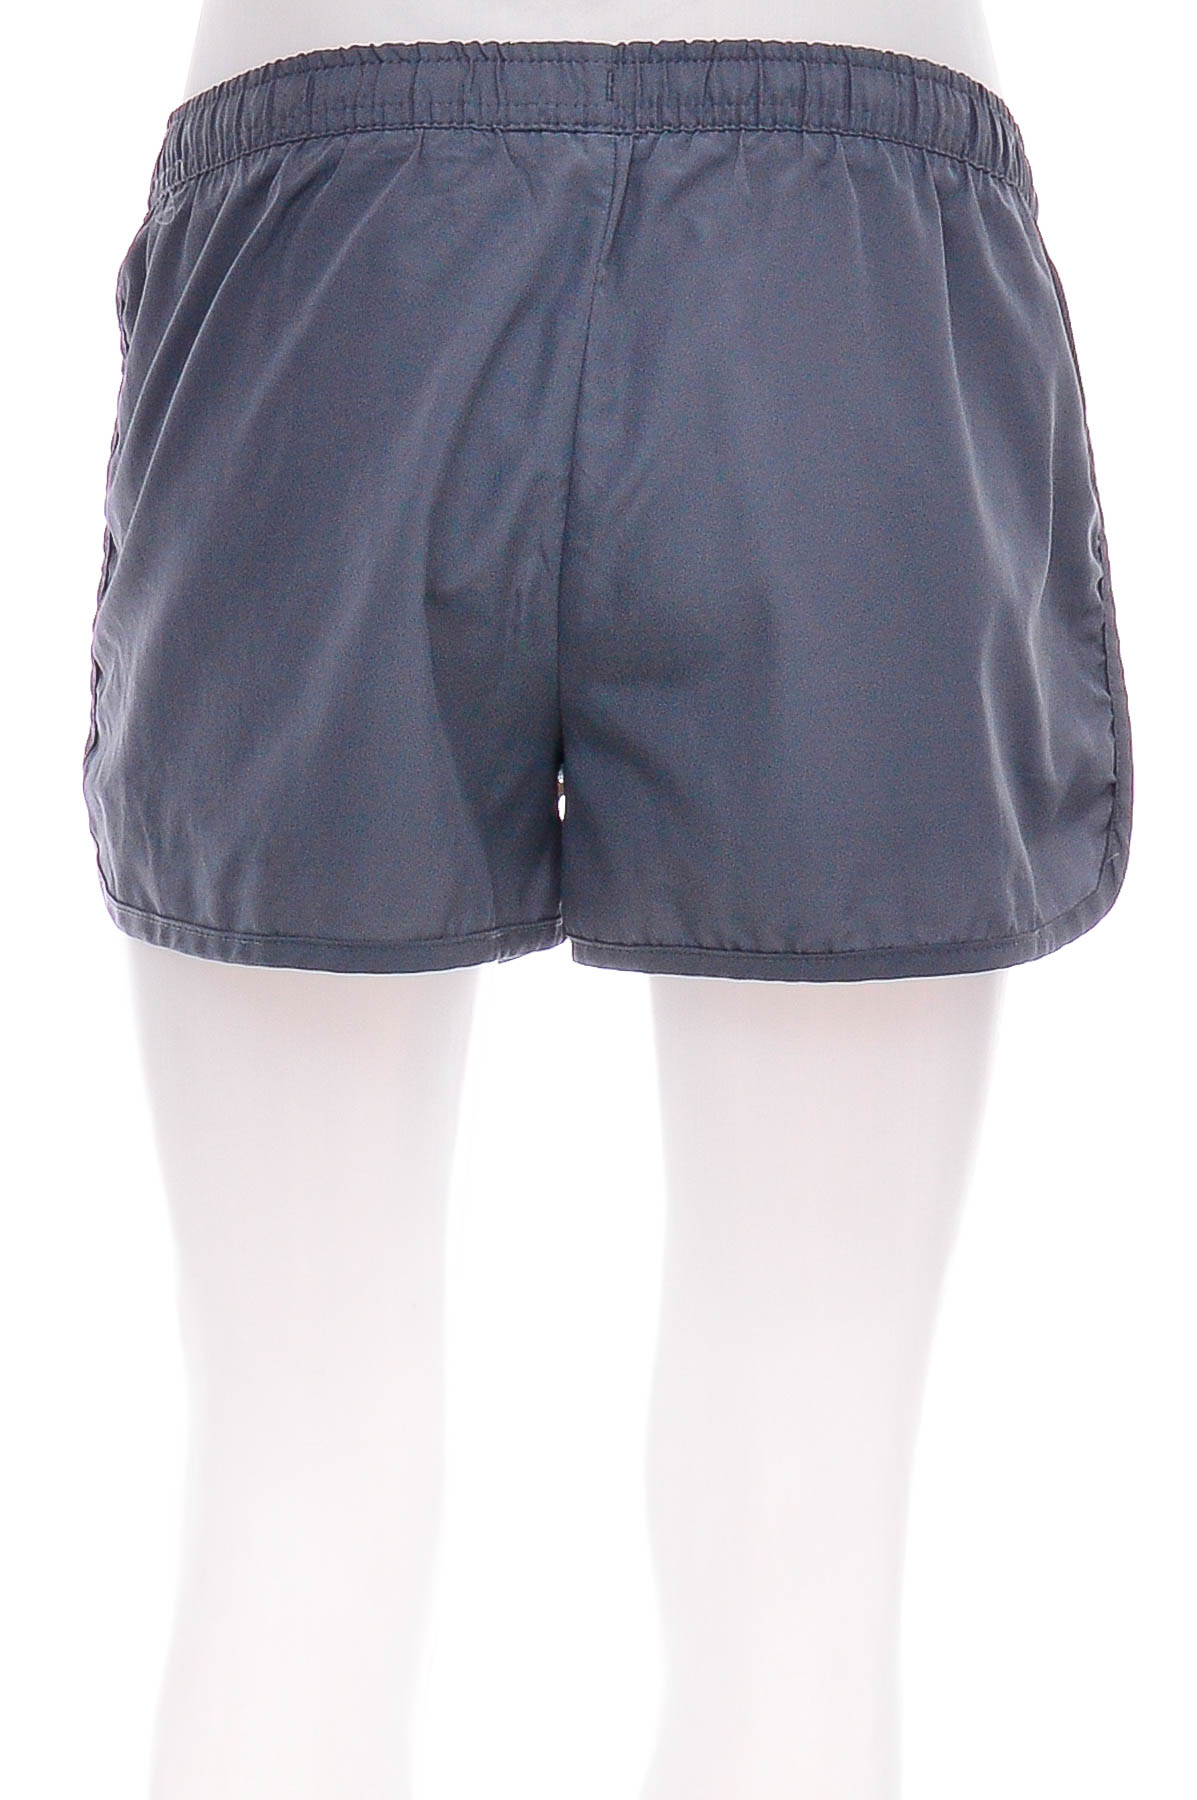 Women's shorts - Crivit - 1